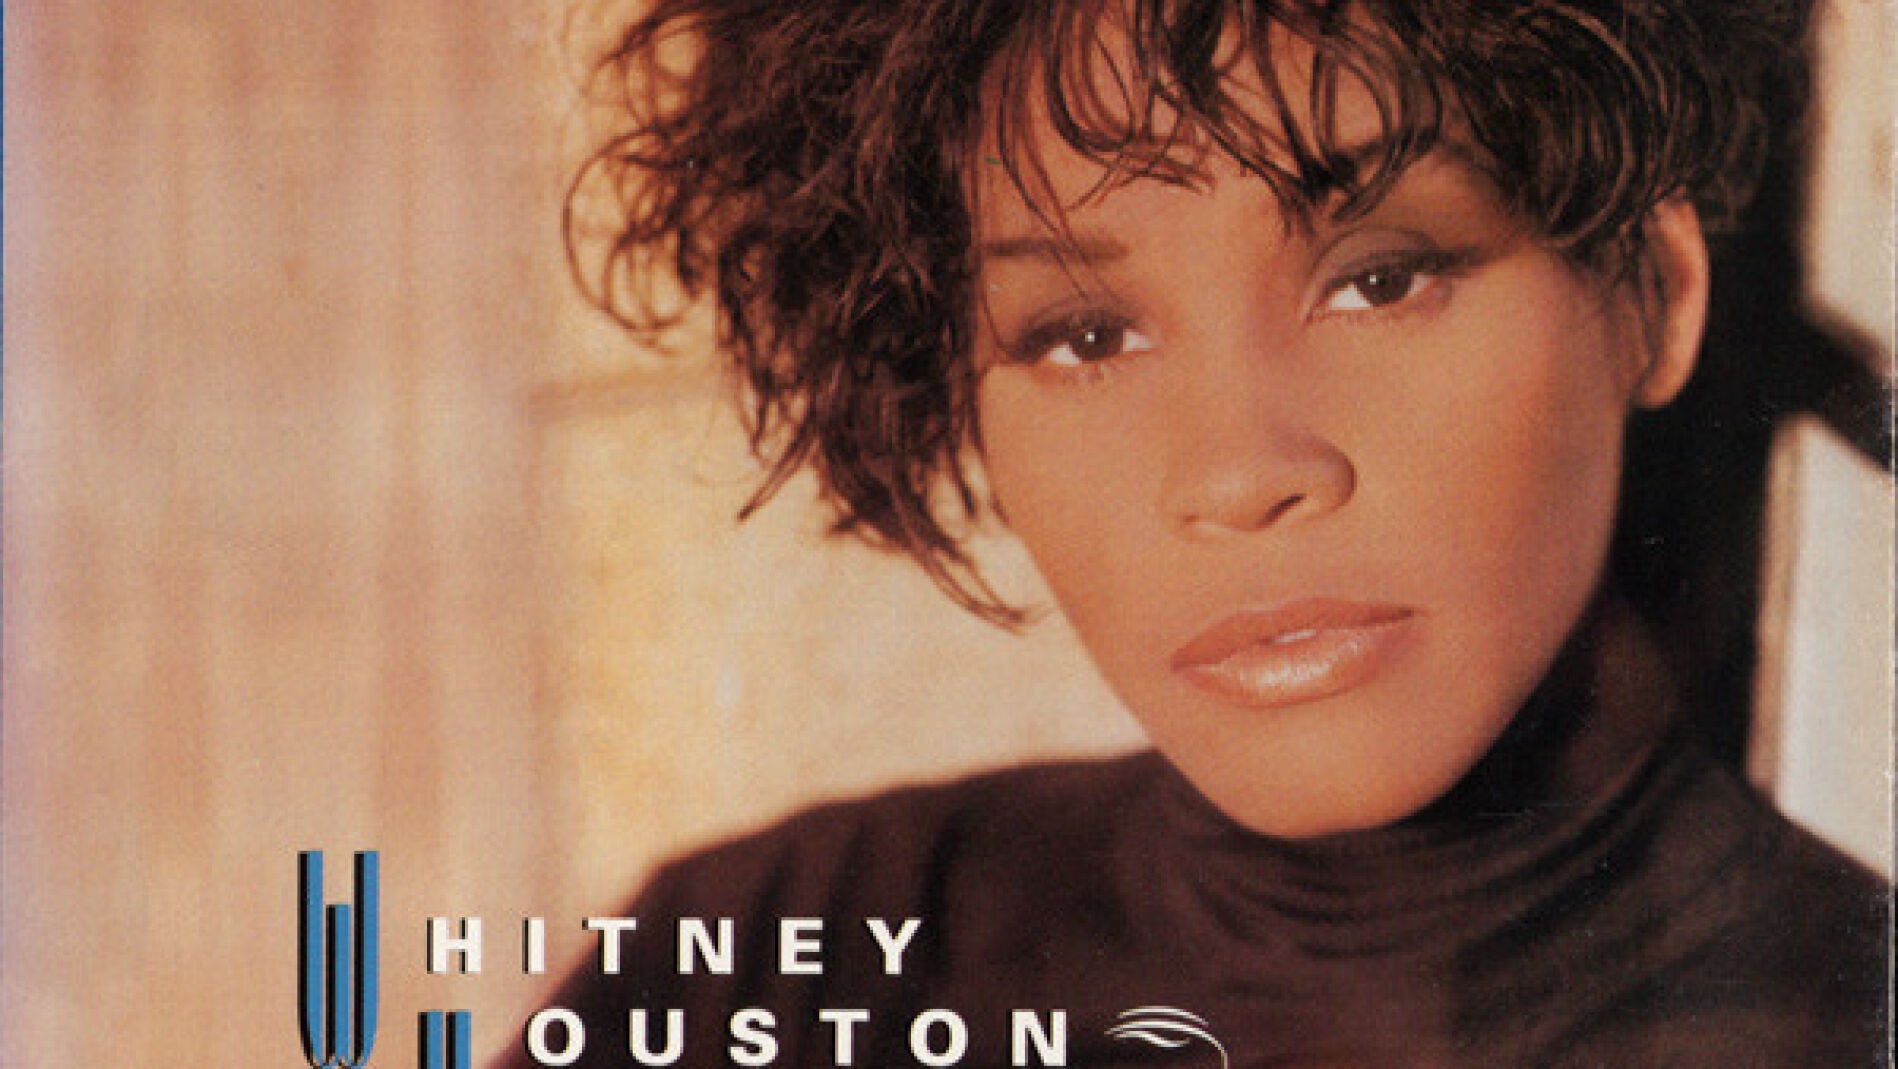 'I will always love you' de Whitney Houston